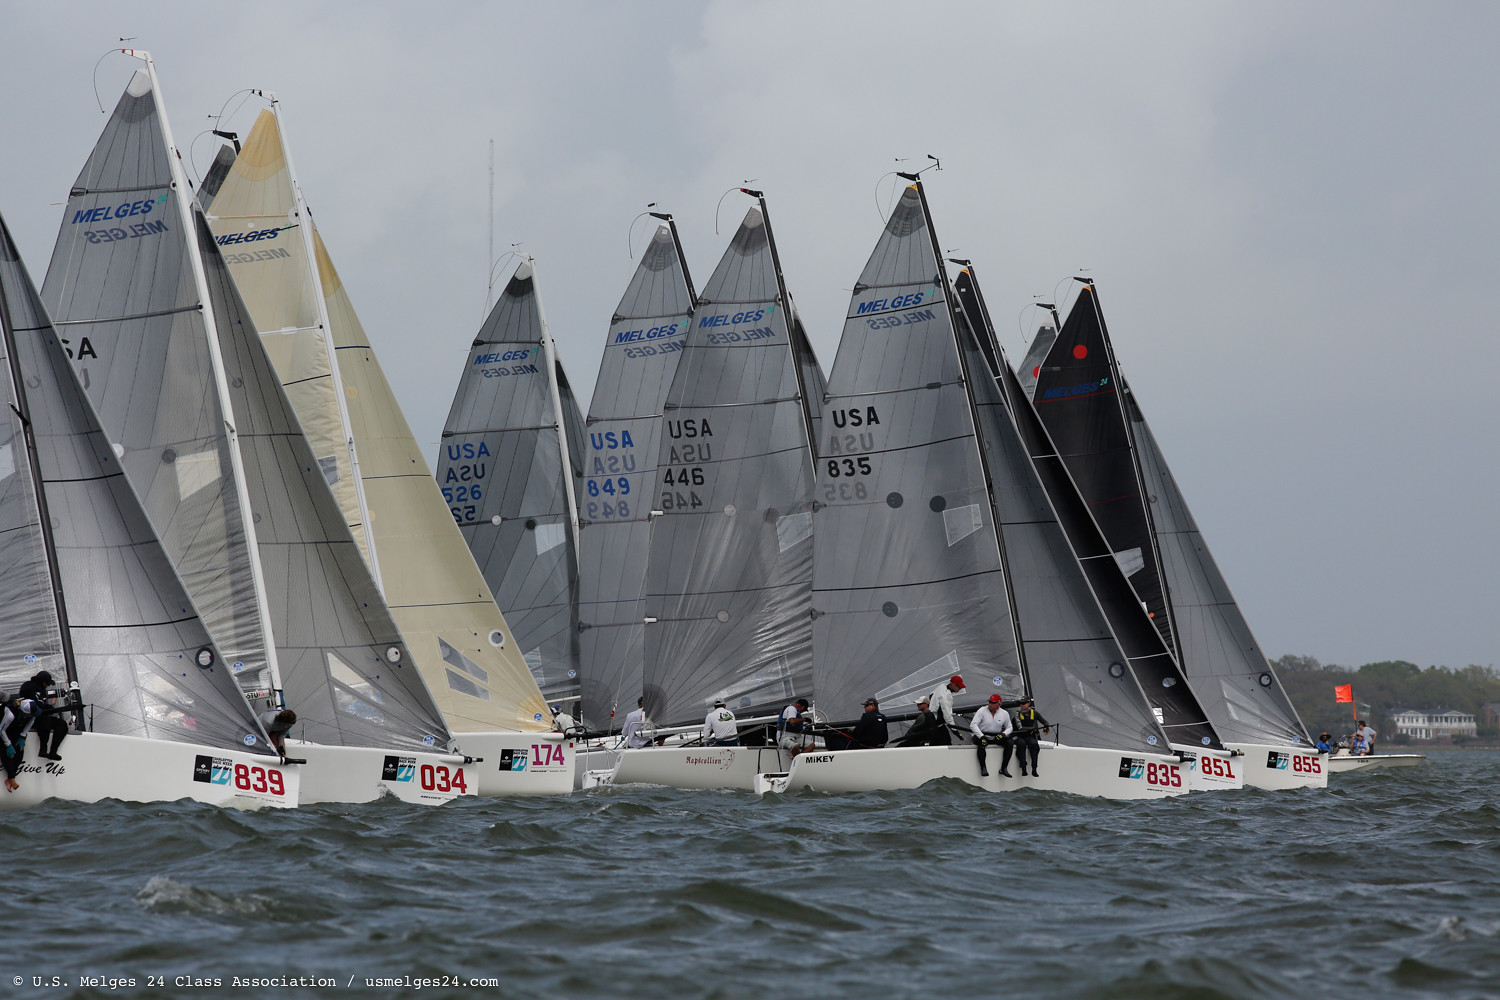 Melges 24 fleet at the Charleston Race Week 2019